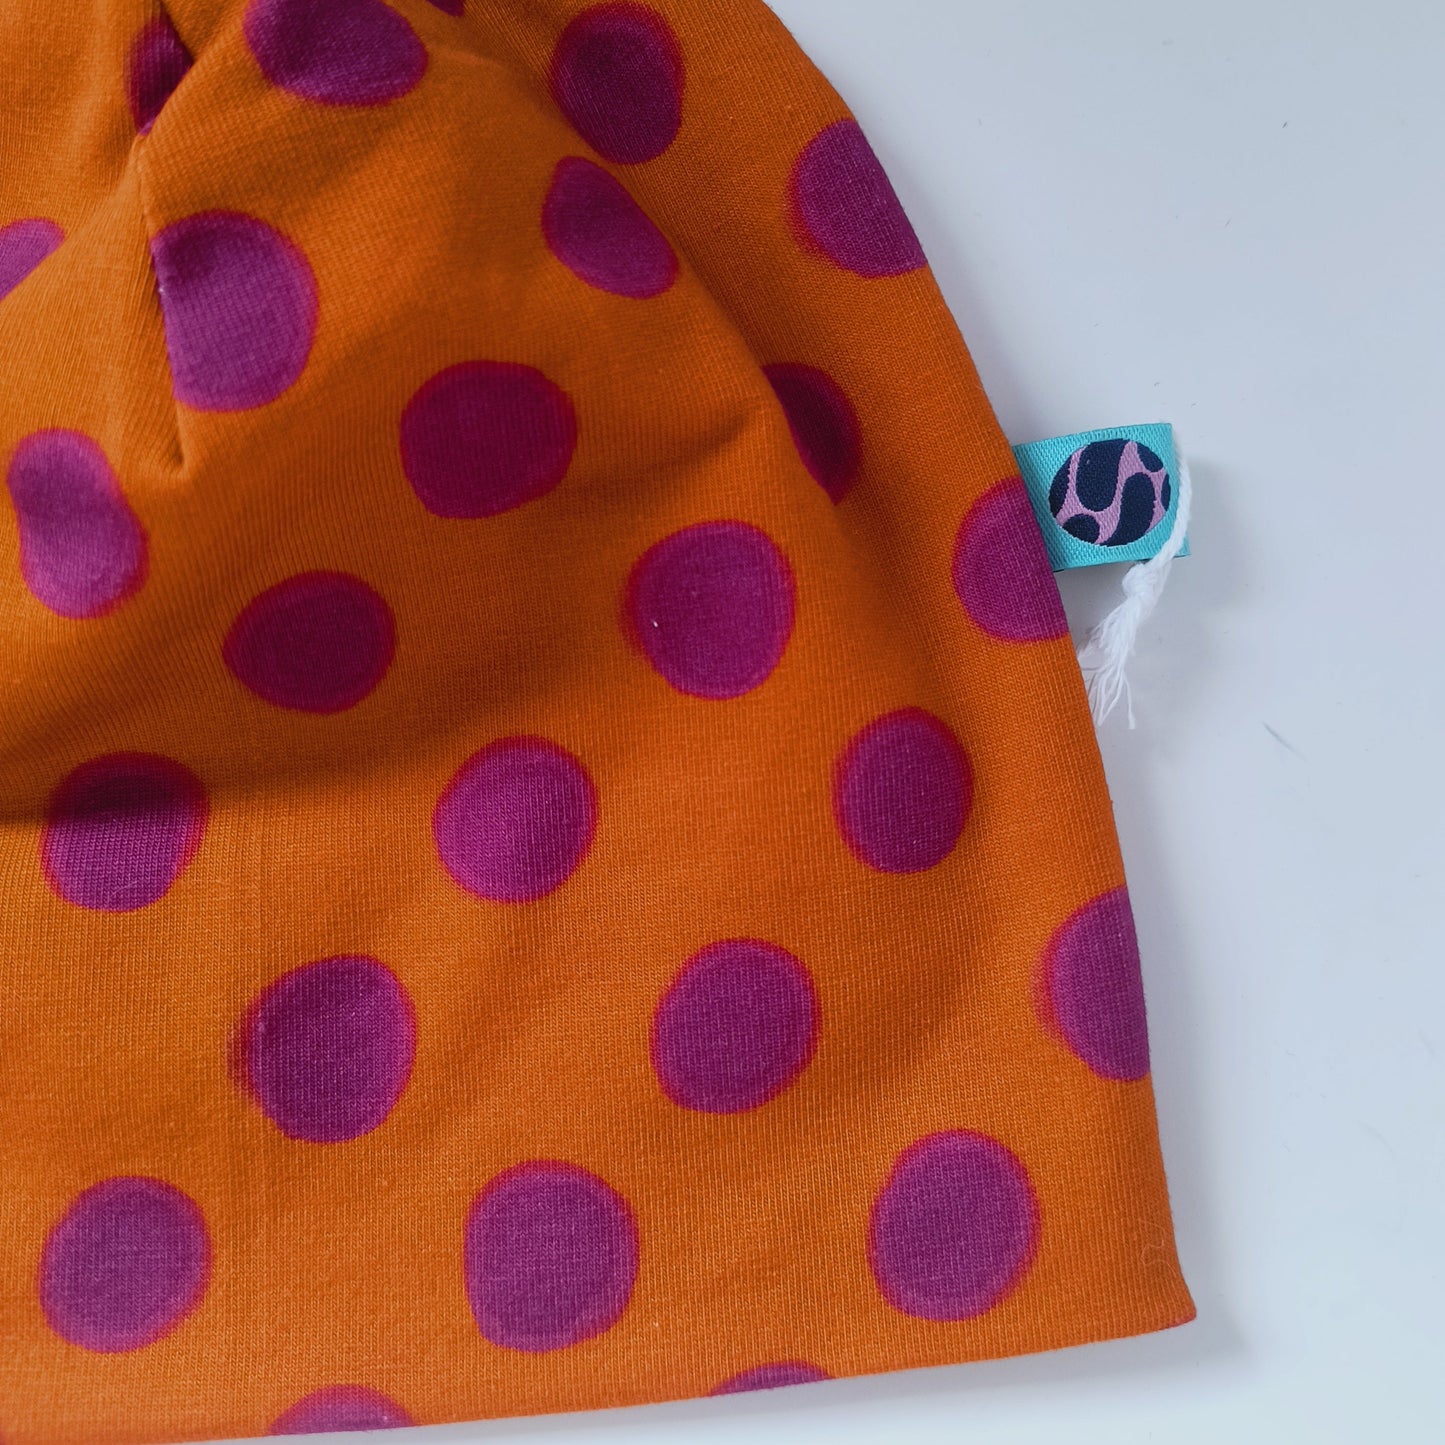 Baby beanie hat, orange purple dots w. blue label, size EUR 44 cm head circumference/US 6-7 months (Handmade in Canada)